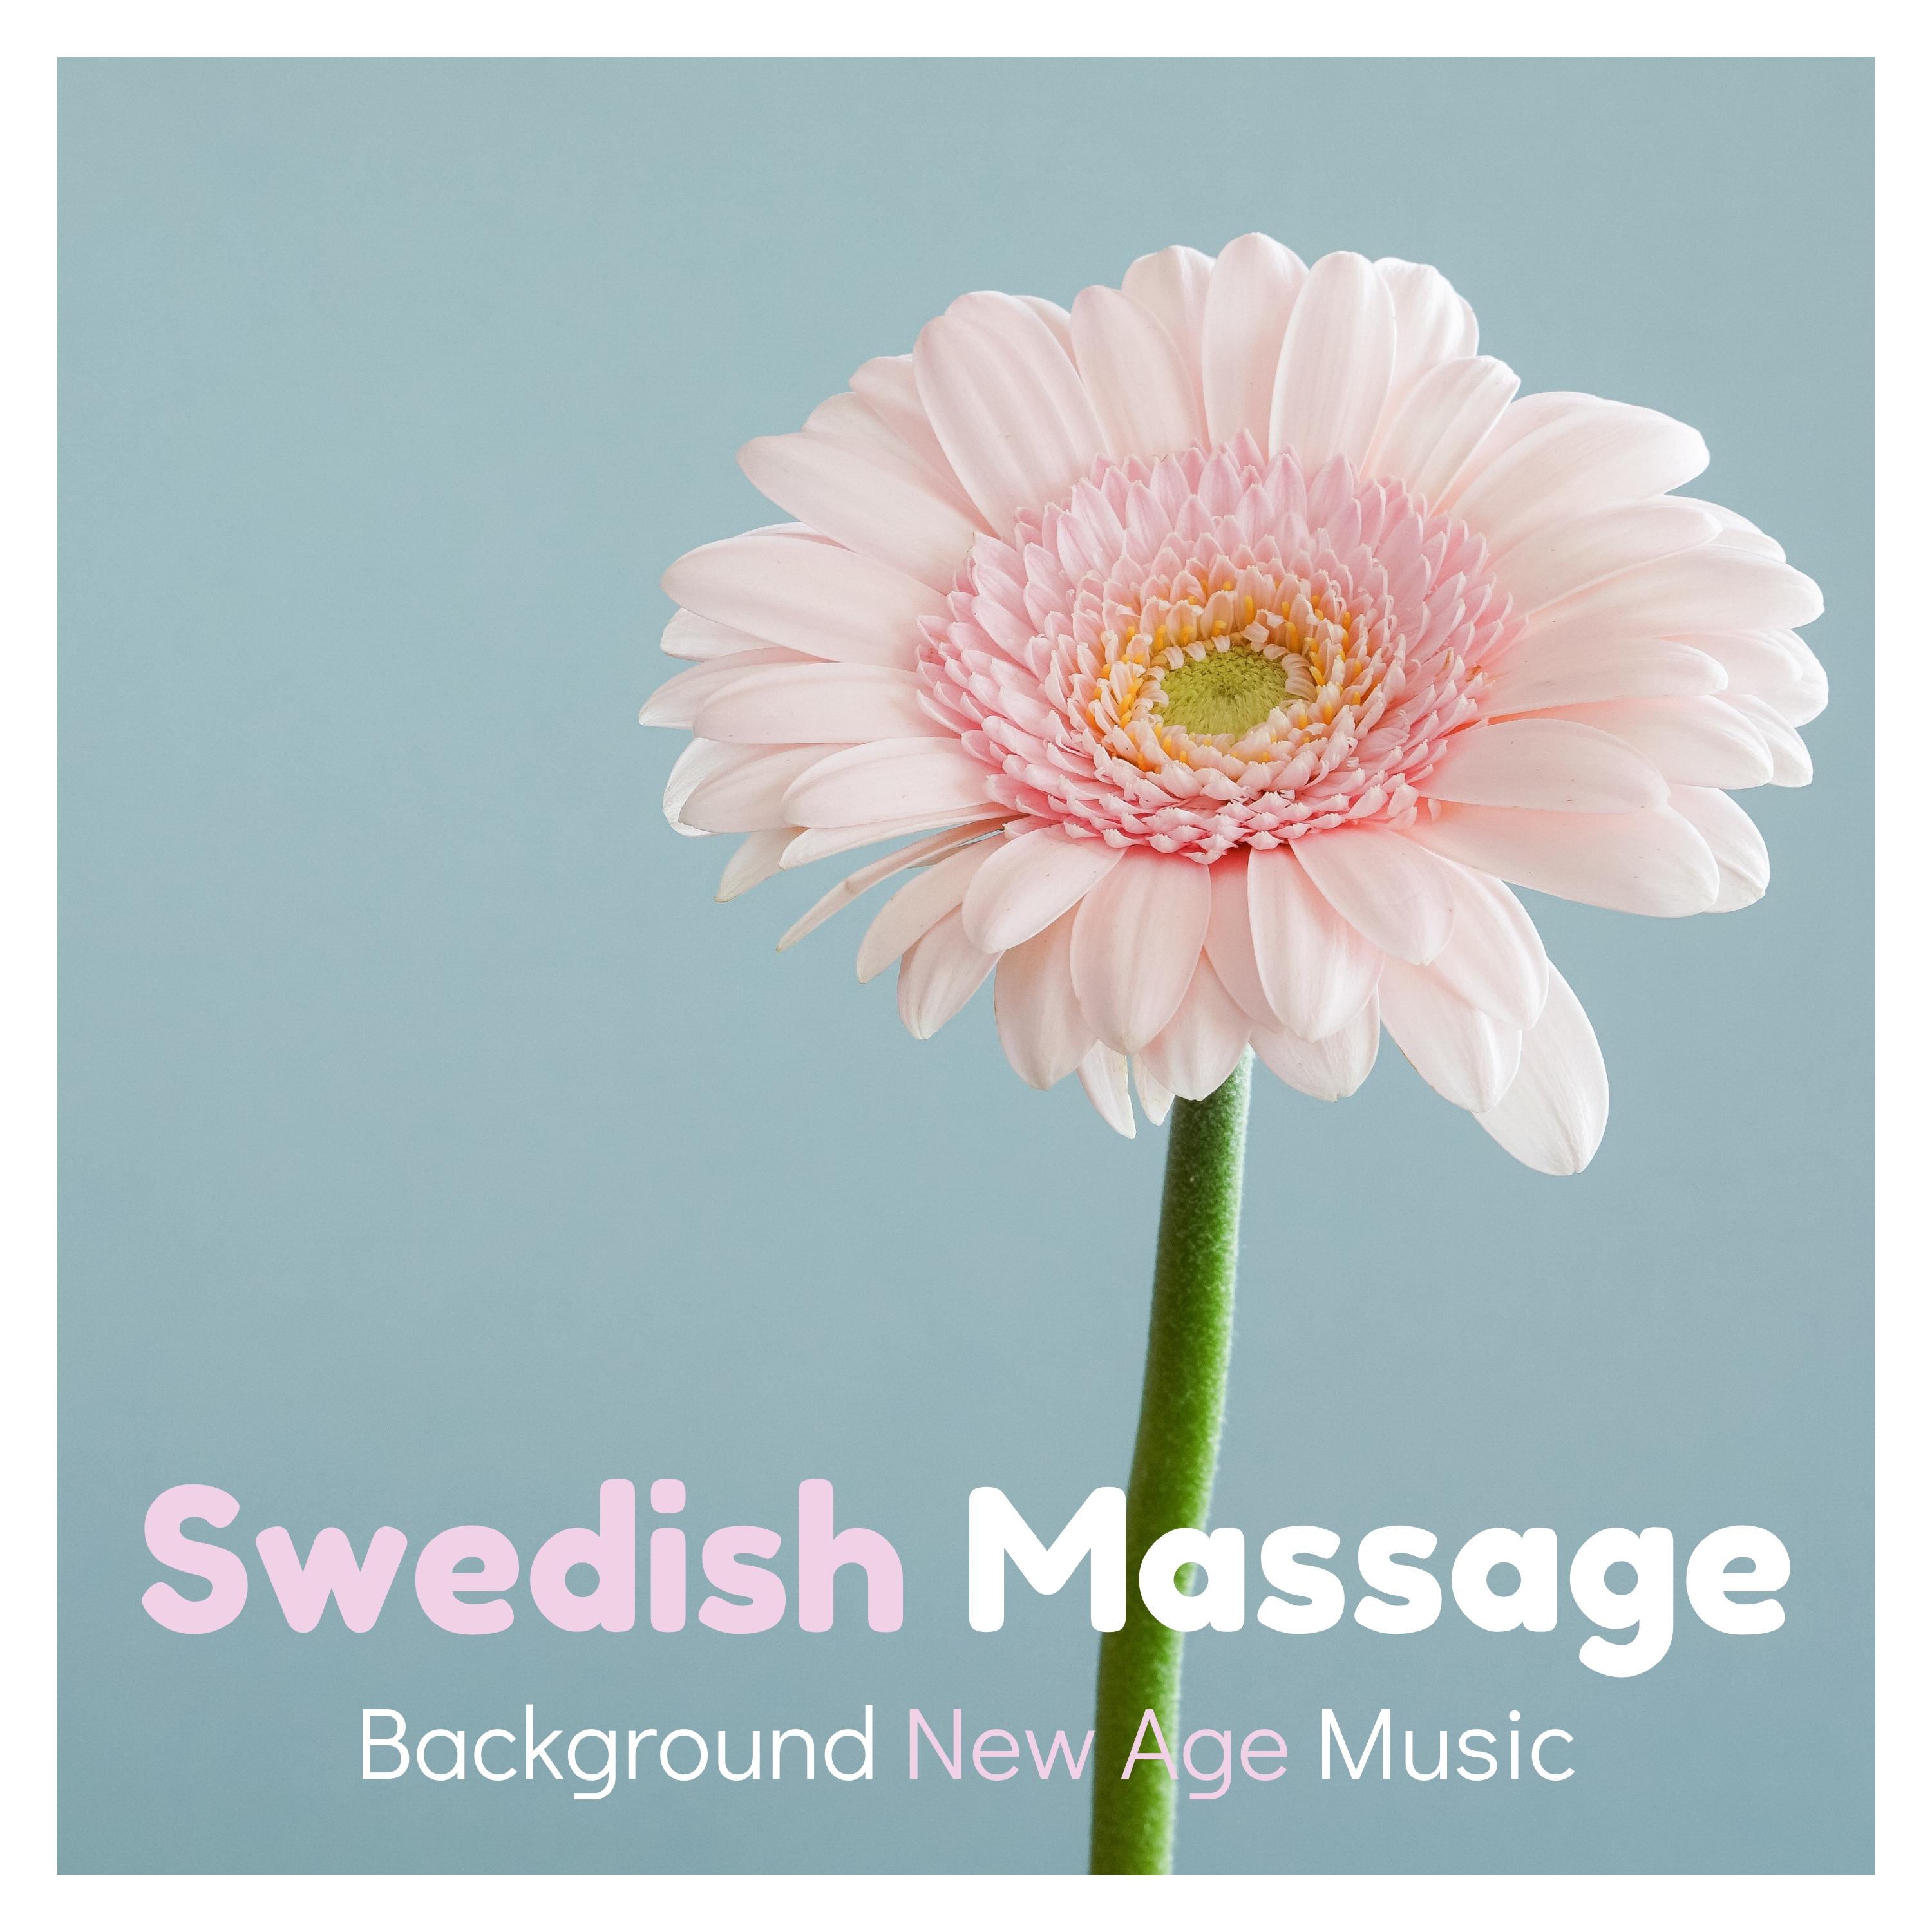 Swedish Massage - Background New Age Music